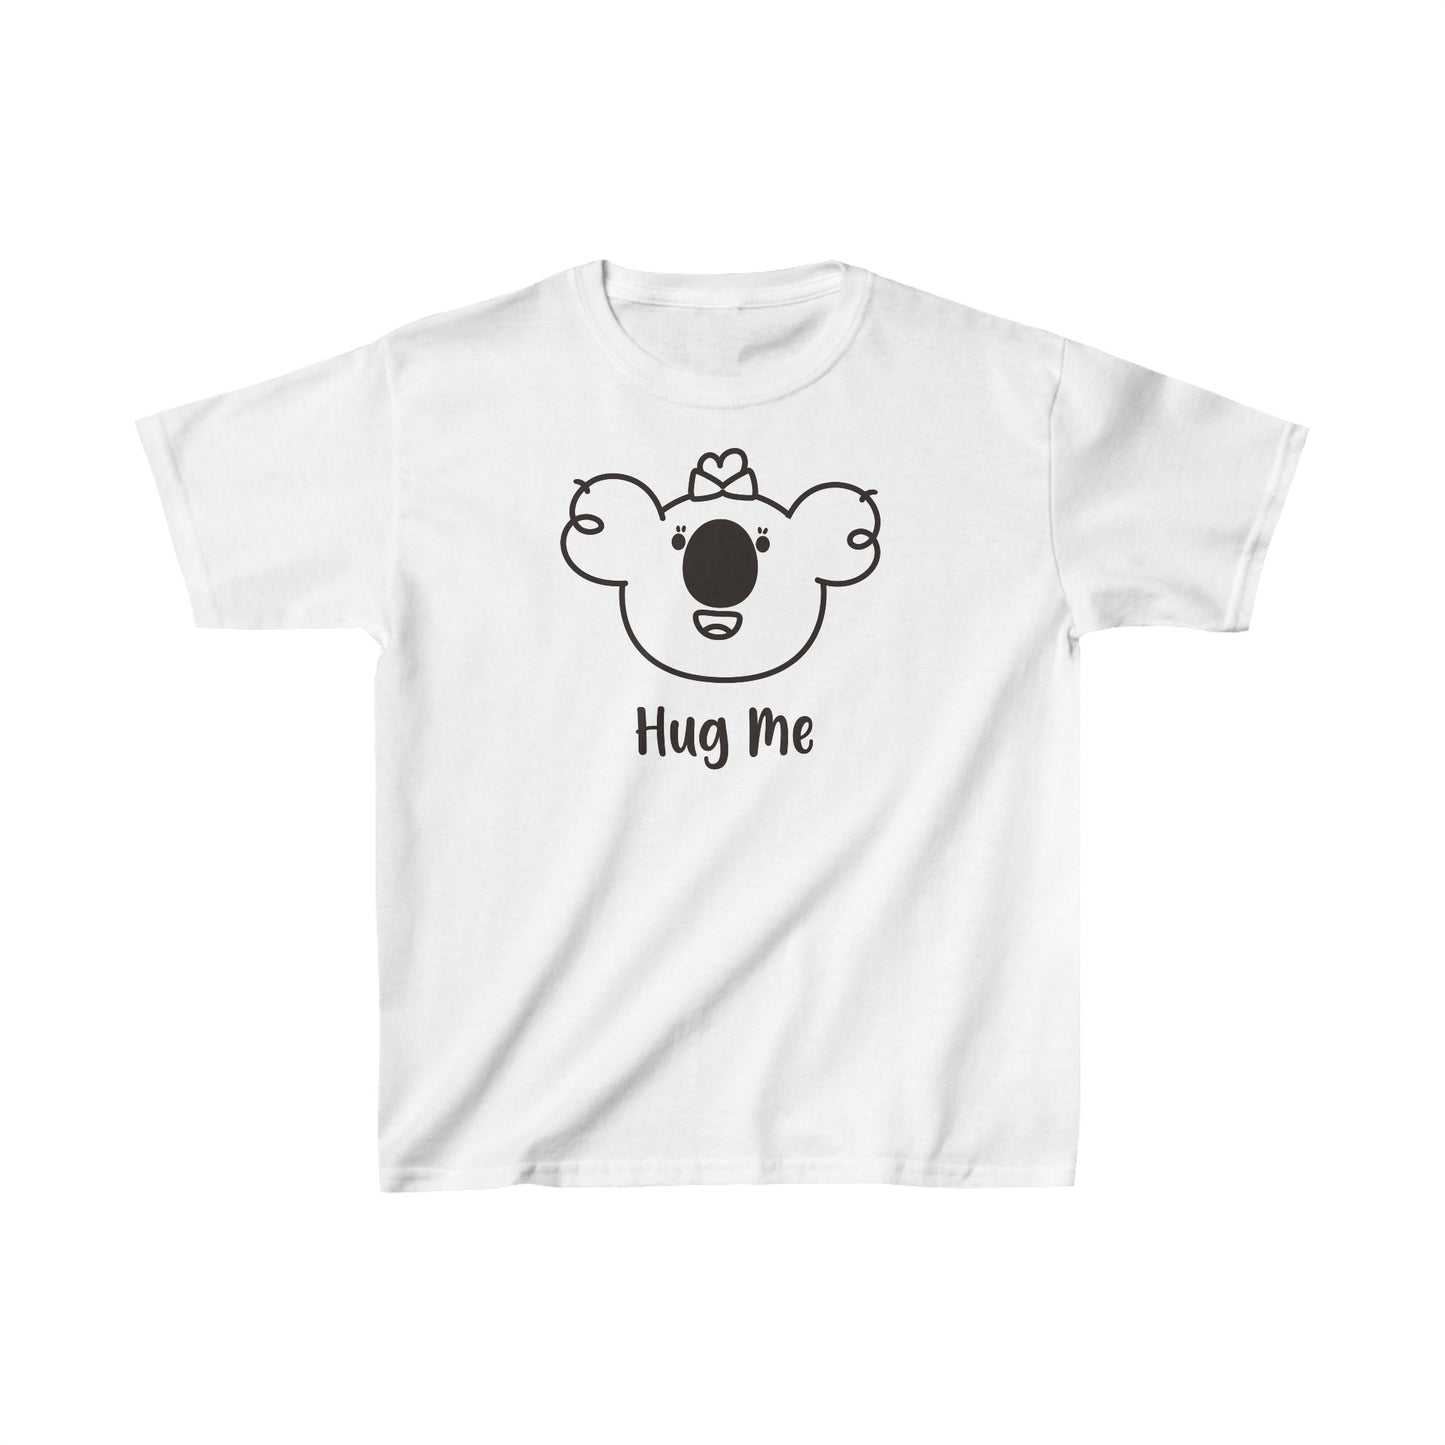 Poppy's Hug Me Kid's T-shirt - Bright Colors